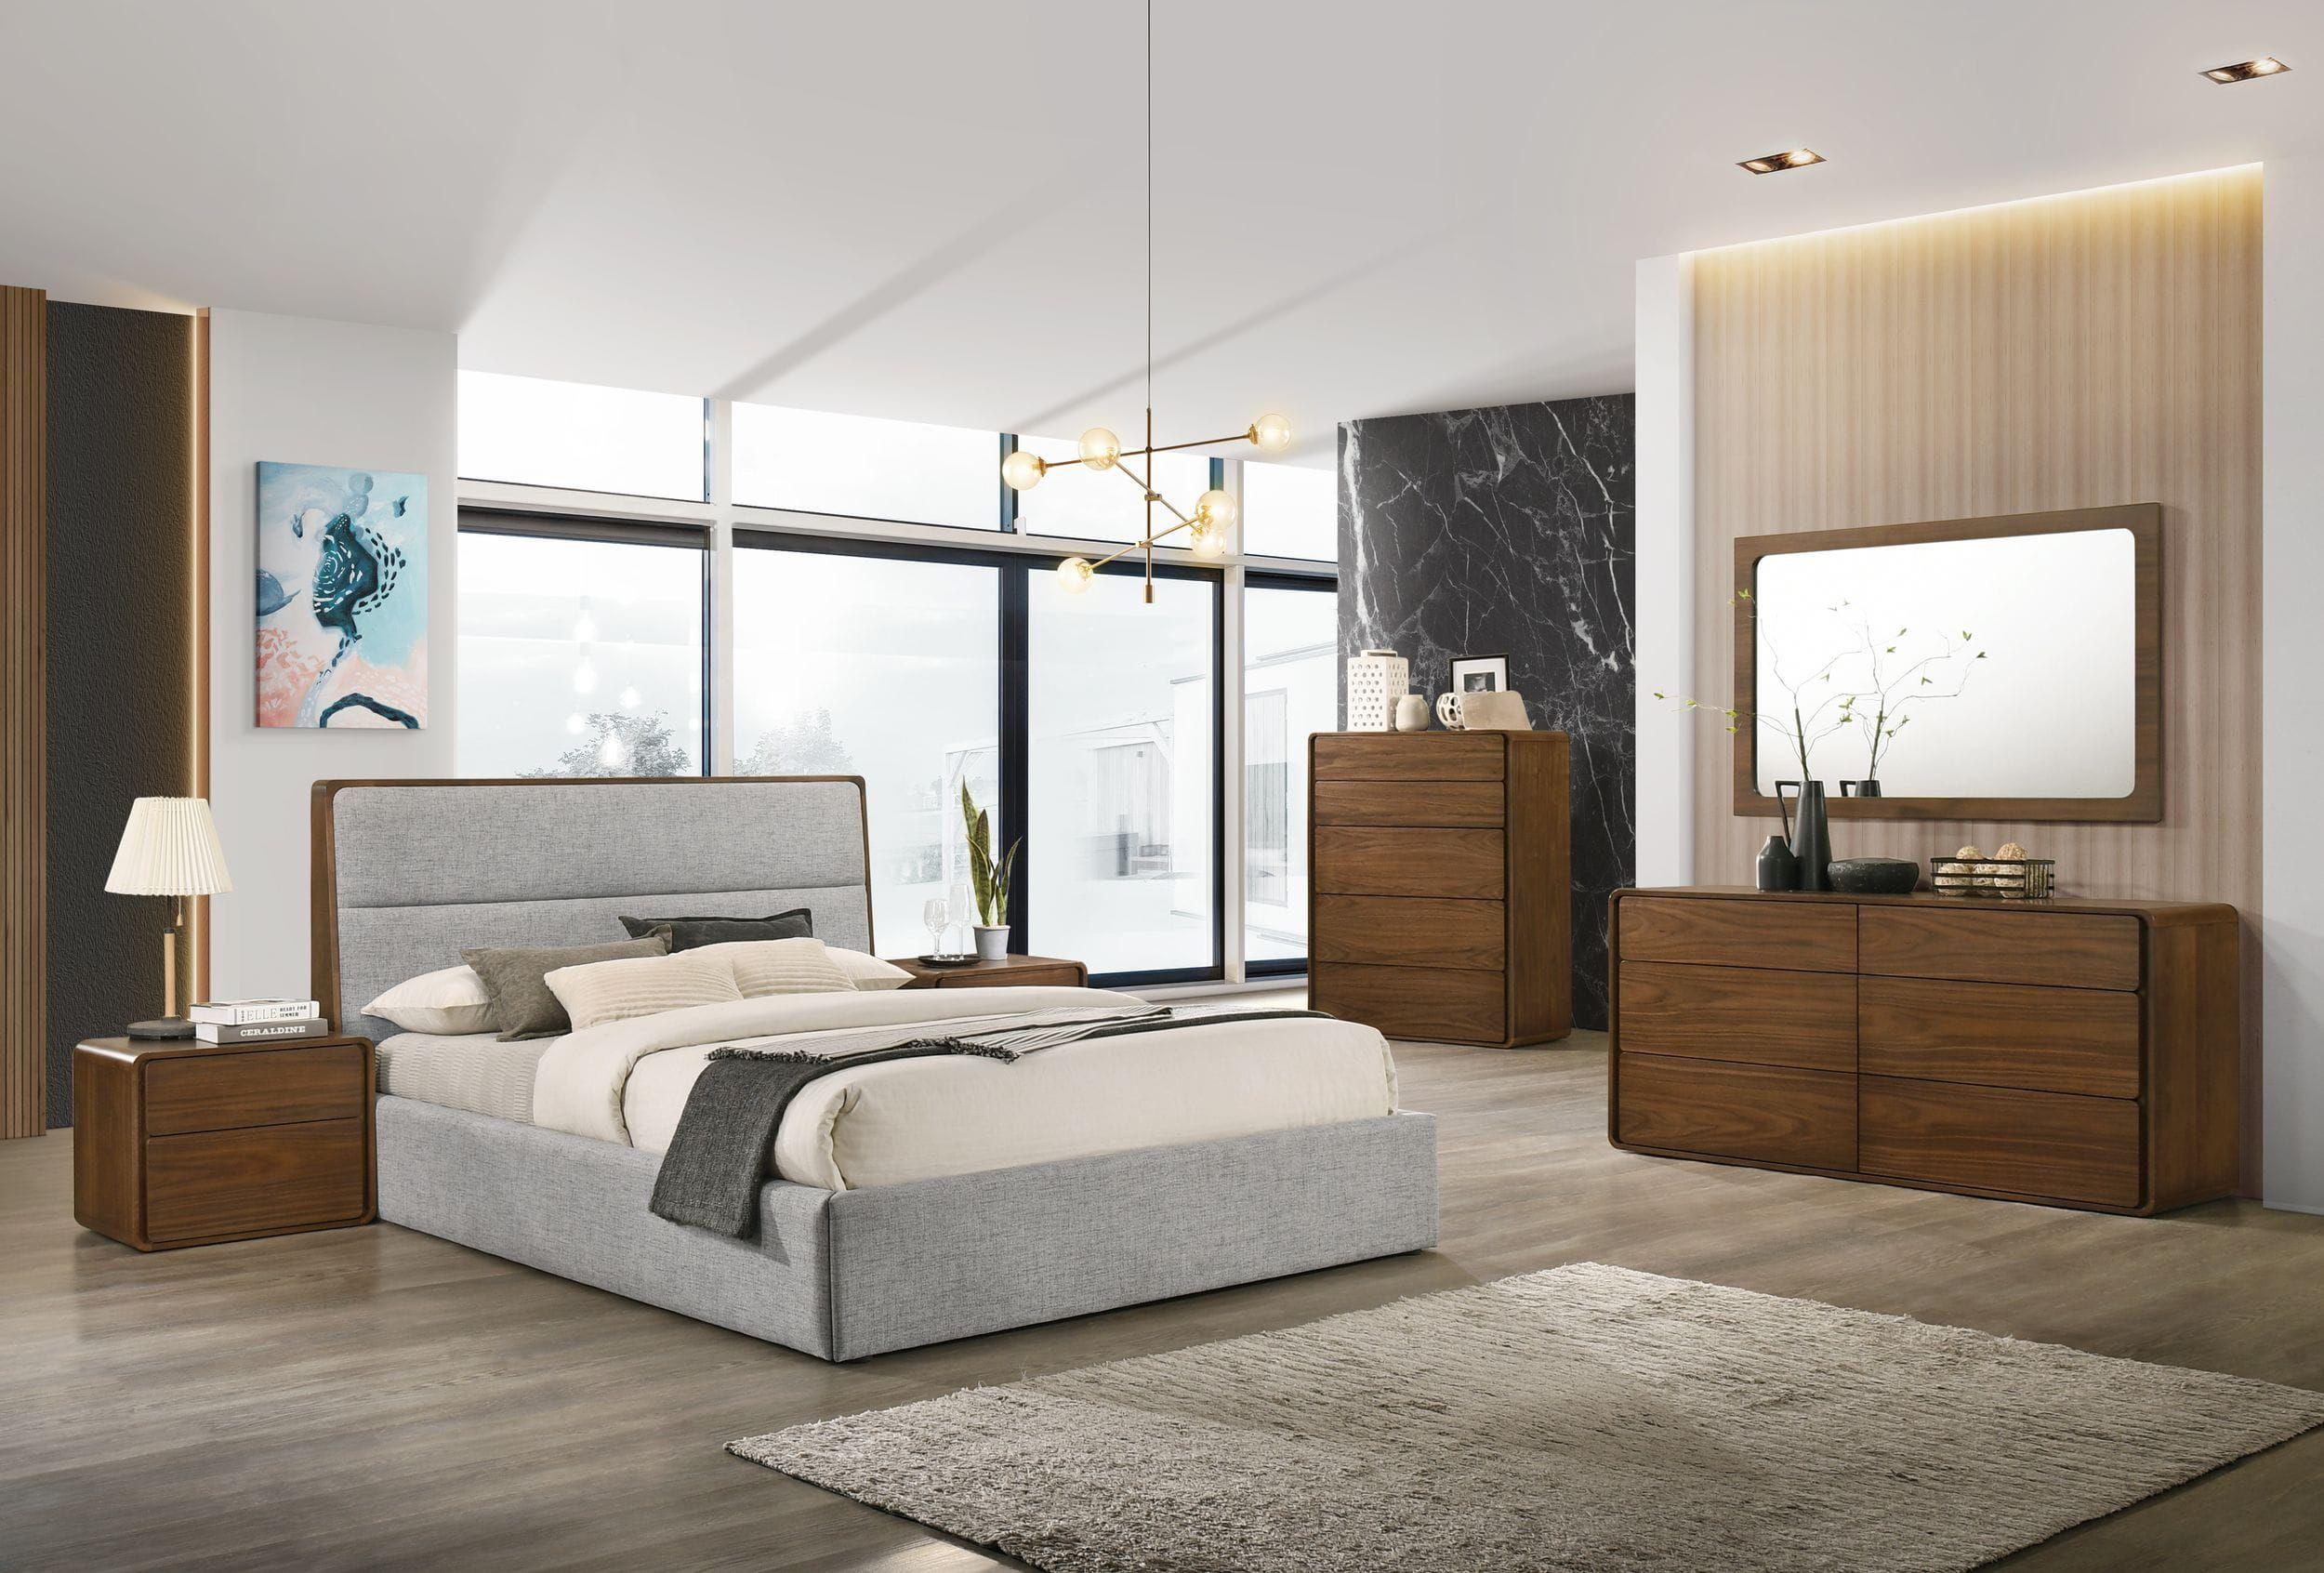 Contemporary, Modern Platform Bedroom Set Dustin VGMABR-99-BED-K-5pcs in Walnut, Gray Fabric